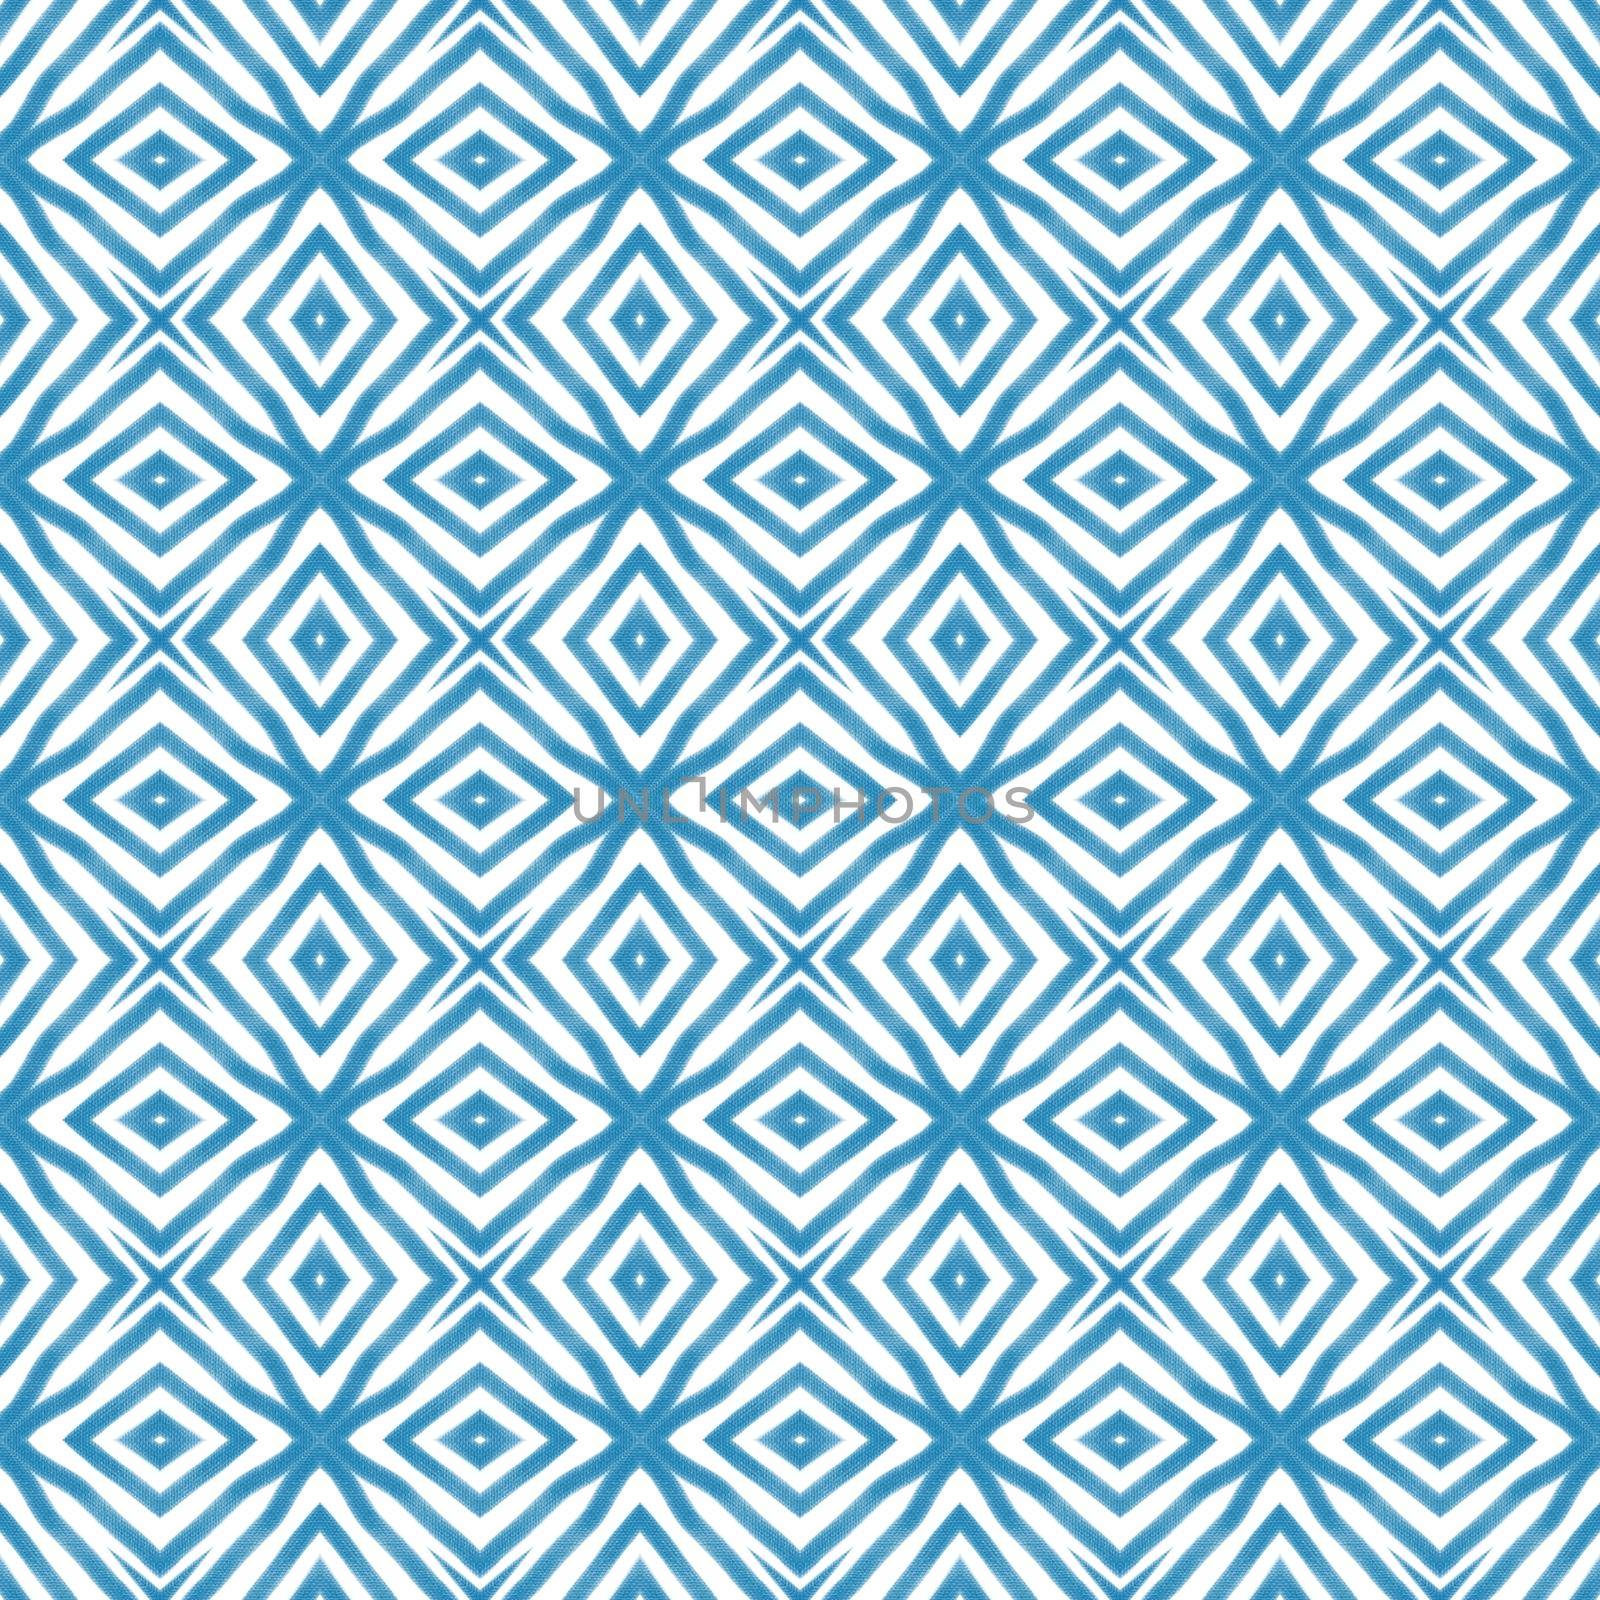 Arabesque hand drawn pattern. Blue symmetrical by beginagain